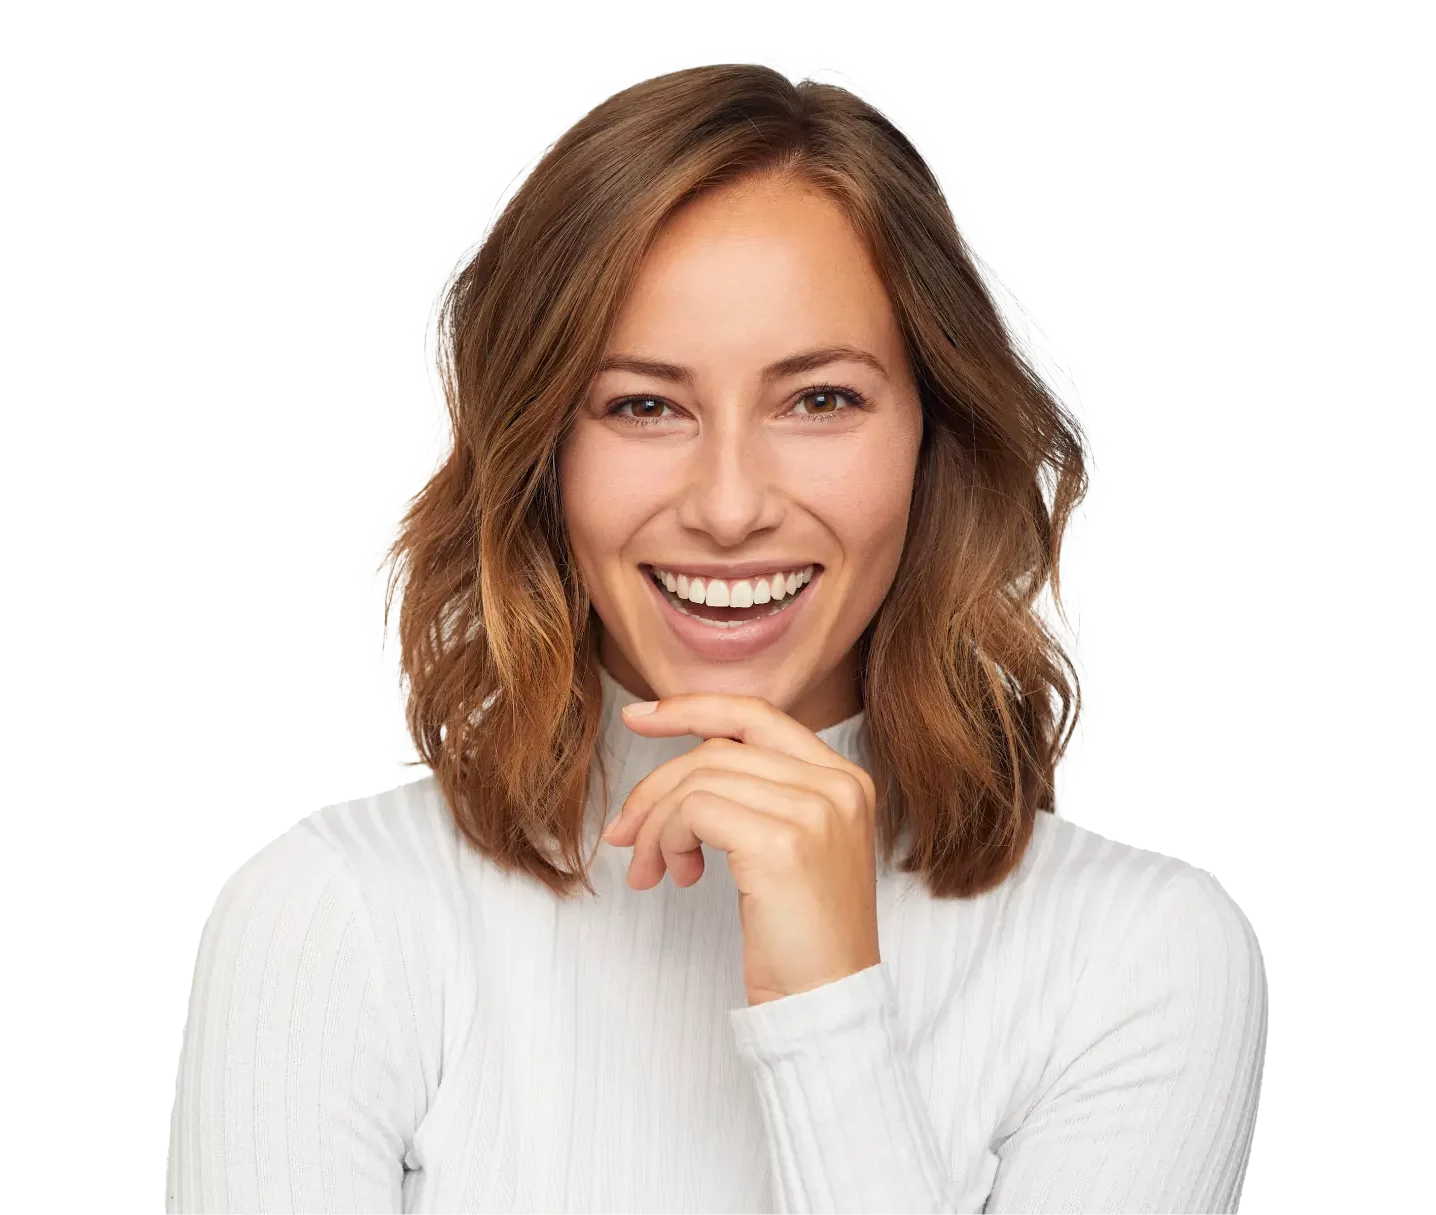 Dental; woman with short brown wavy hair smiling at the camera